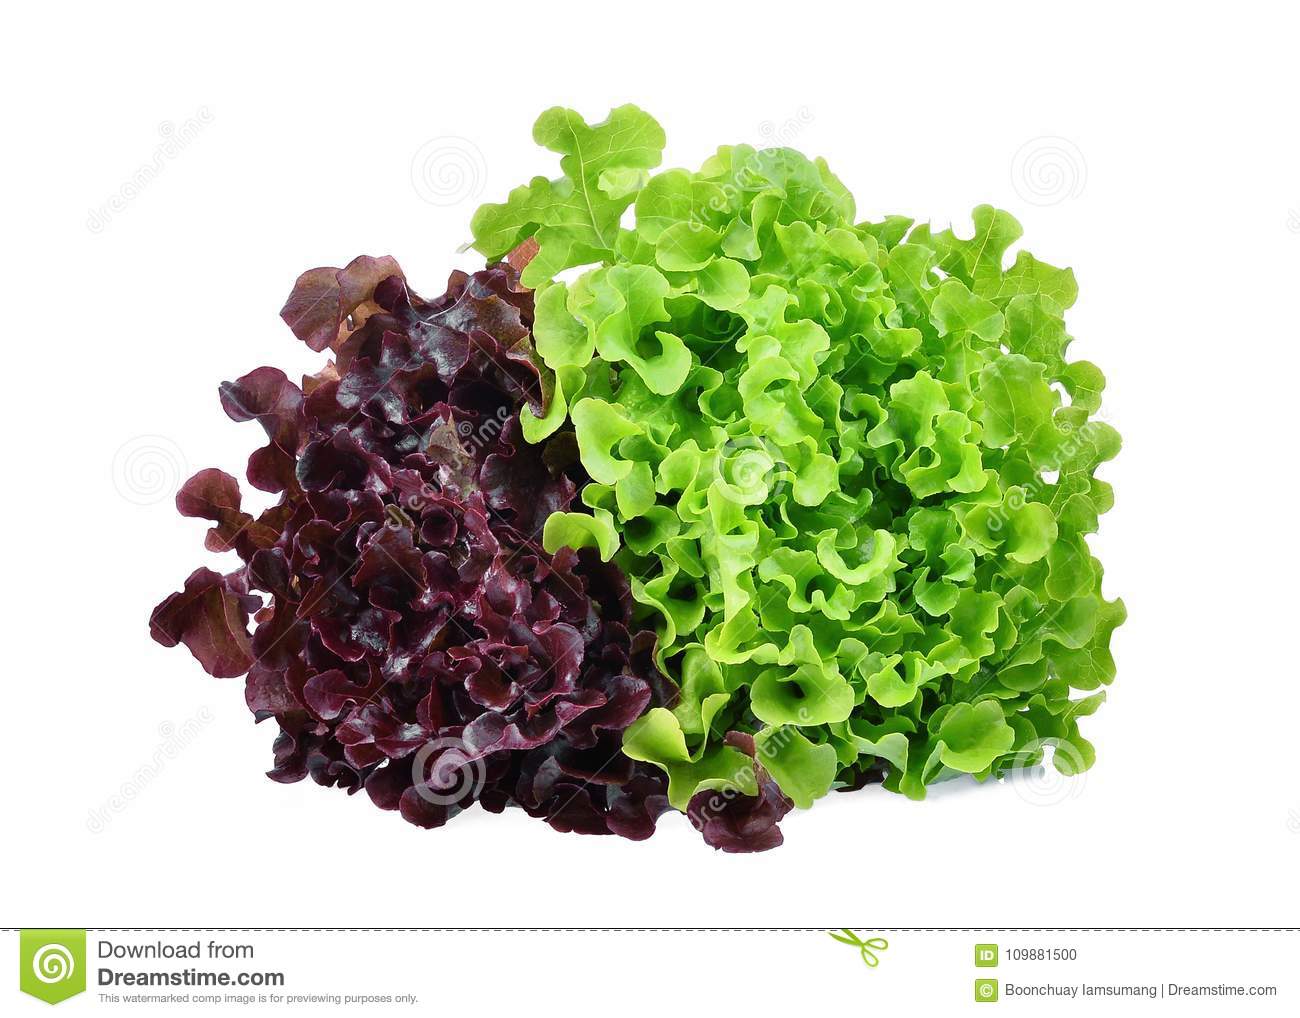 Lettuce Green and Red Oak Each